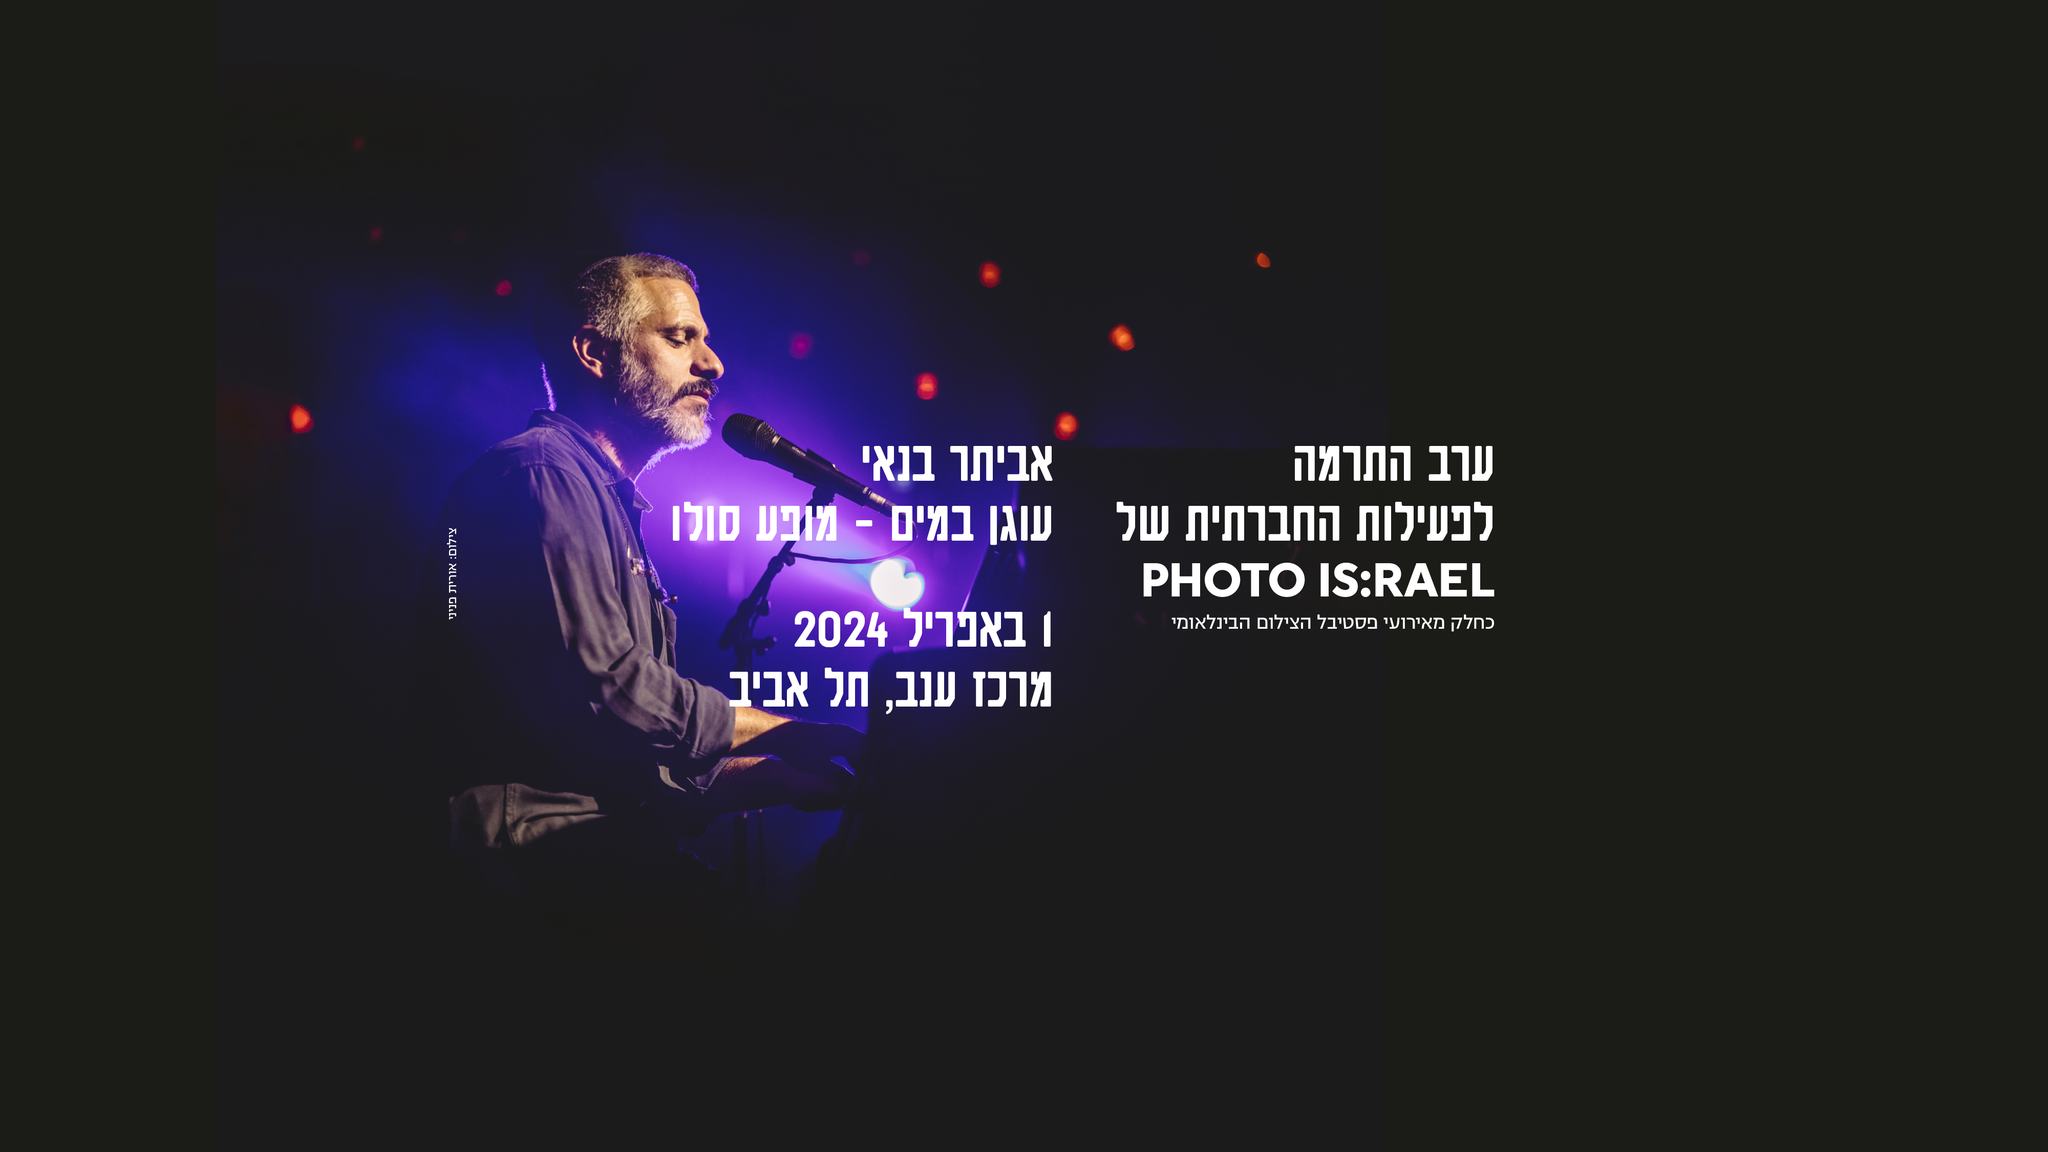 A fundraising evening for PHOTO IS:RAEL - Eviatar Banai concert @ Enav Cultural Center